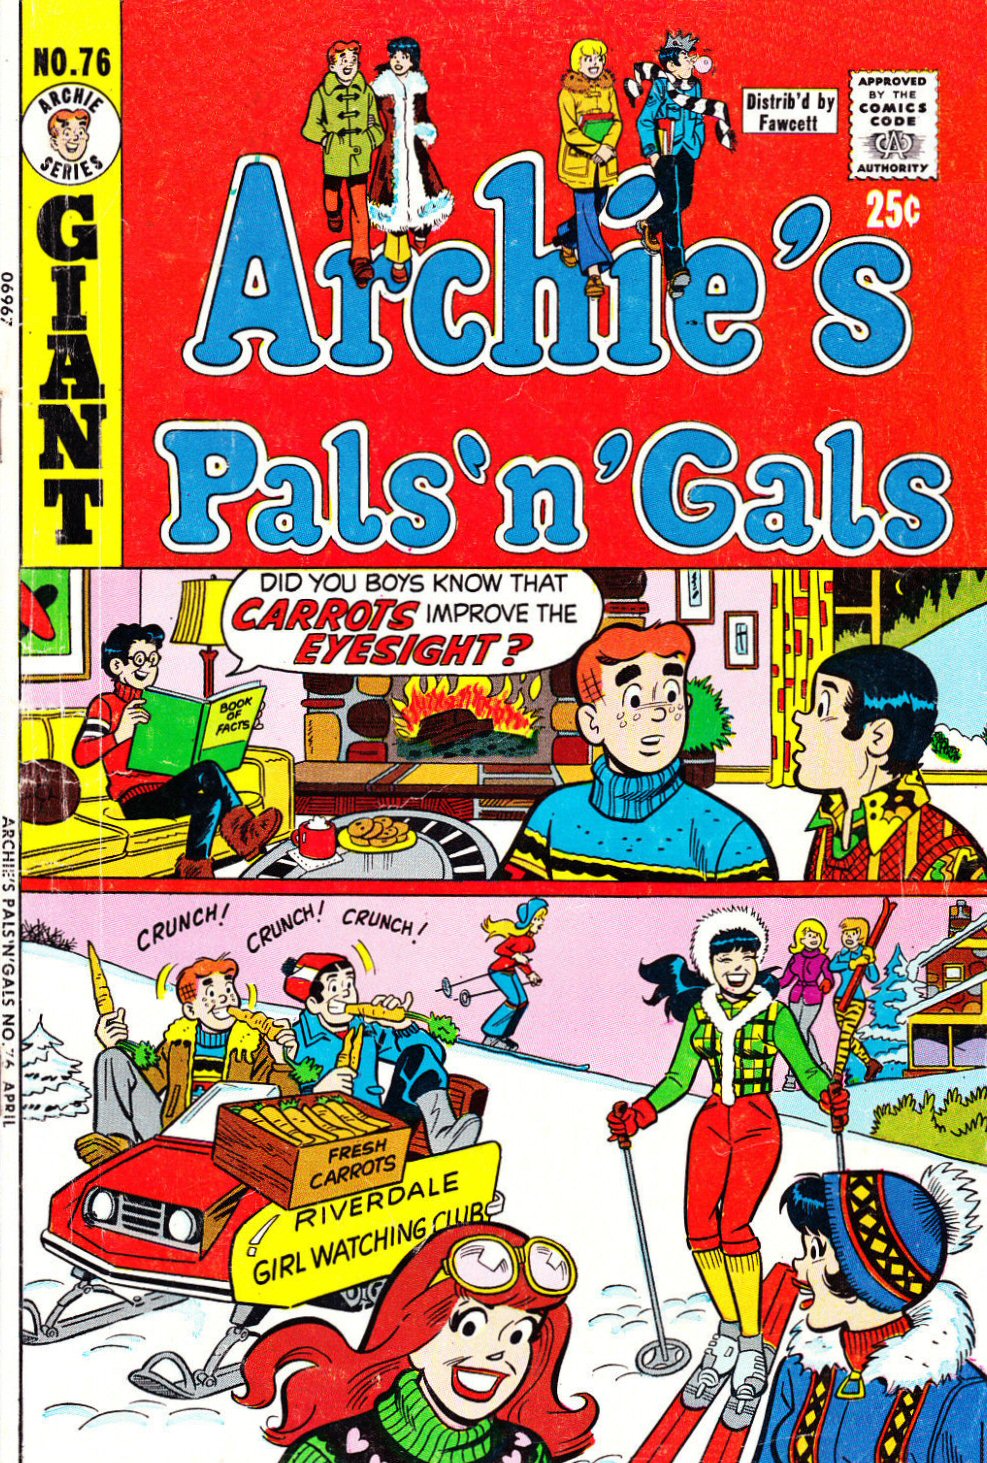 Archie's Pals 'N' Gals 76 Page 1